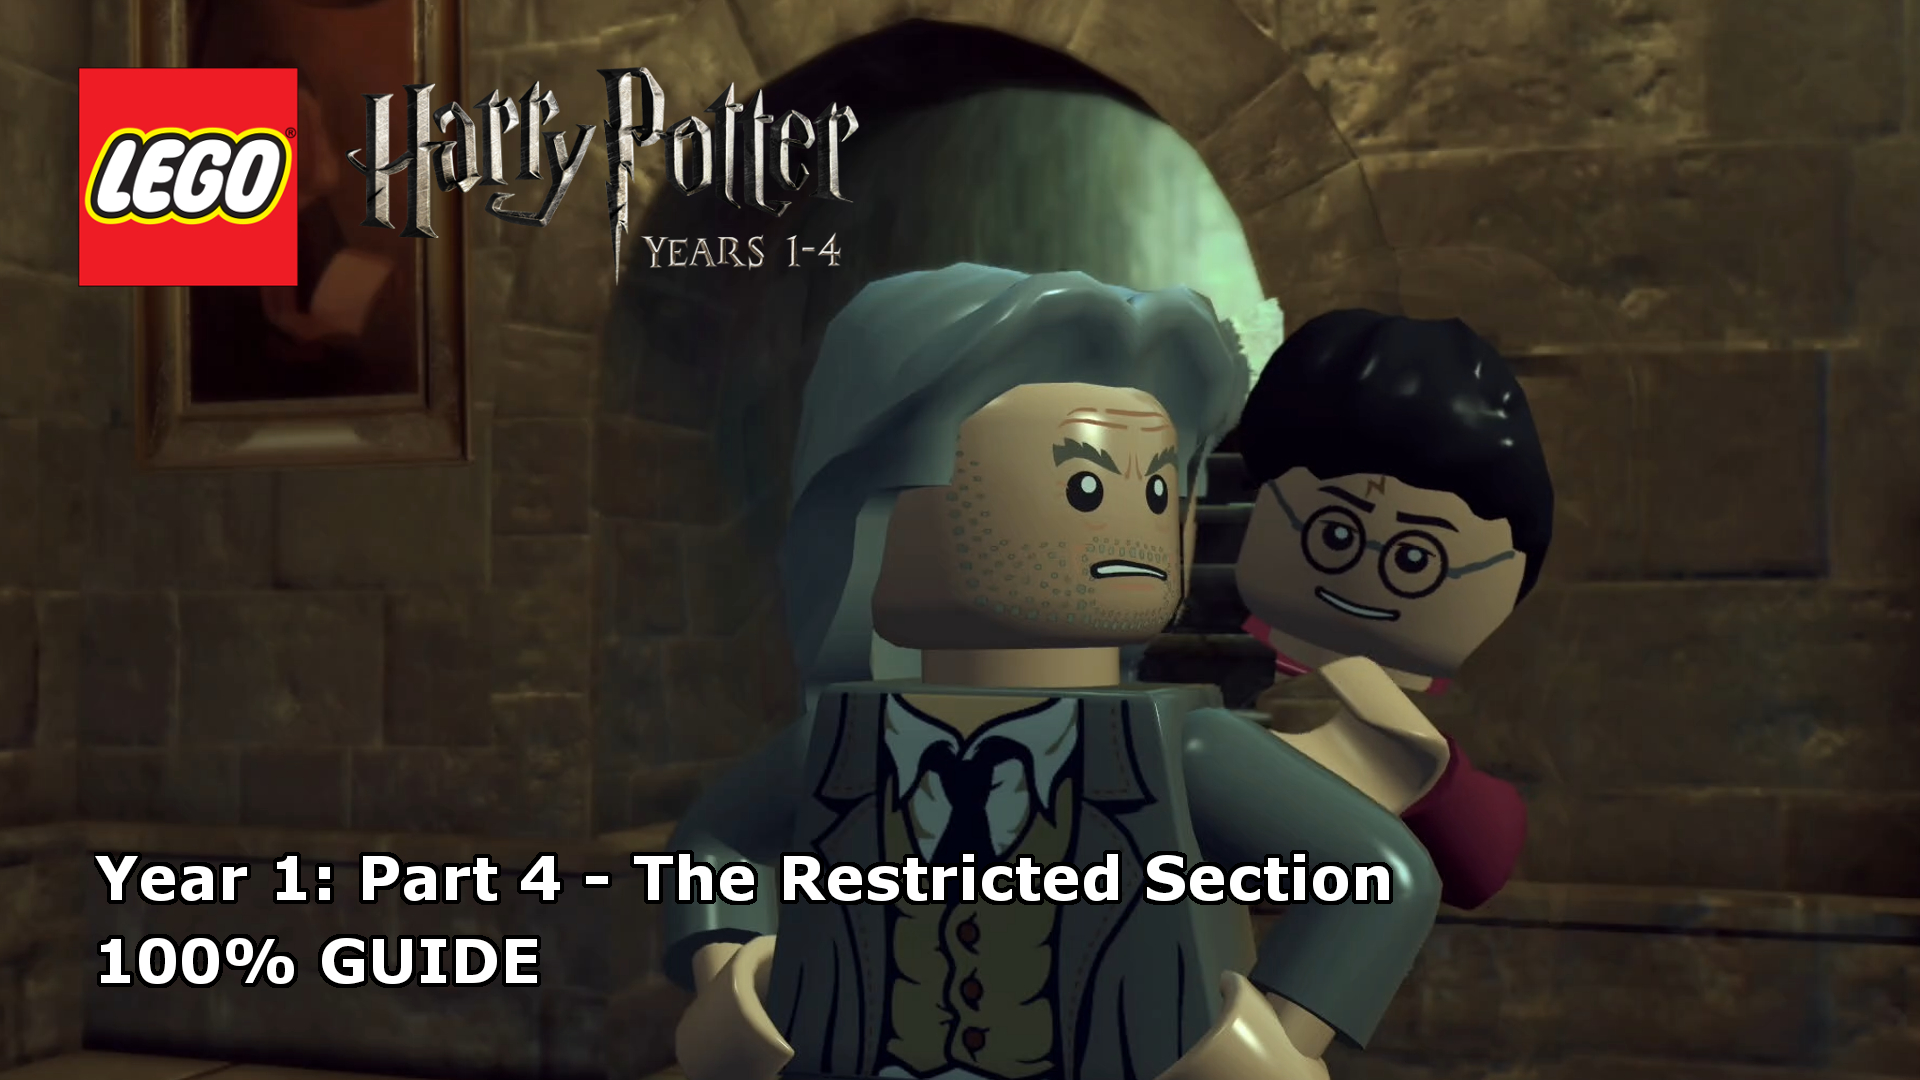 LEGO Harry Potter: Years 1-4 [Walkthroughs] - IGN